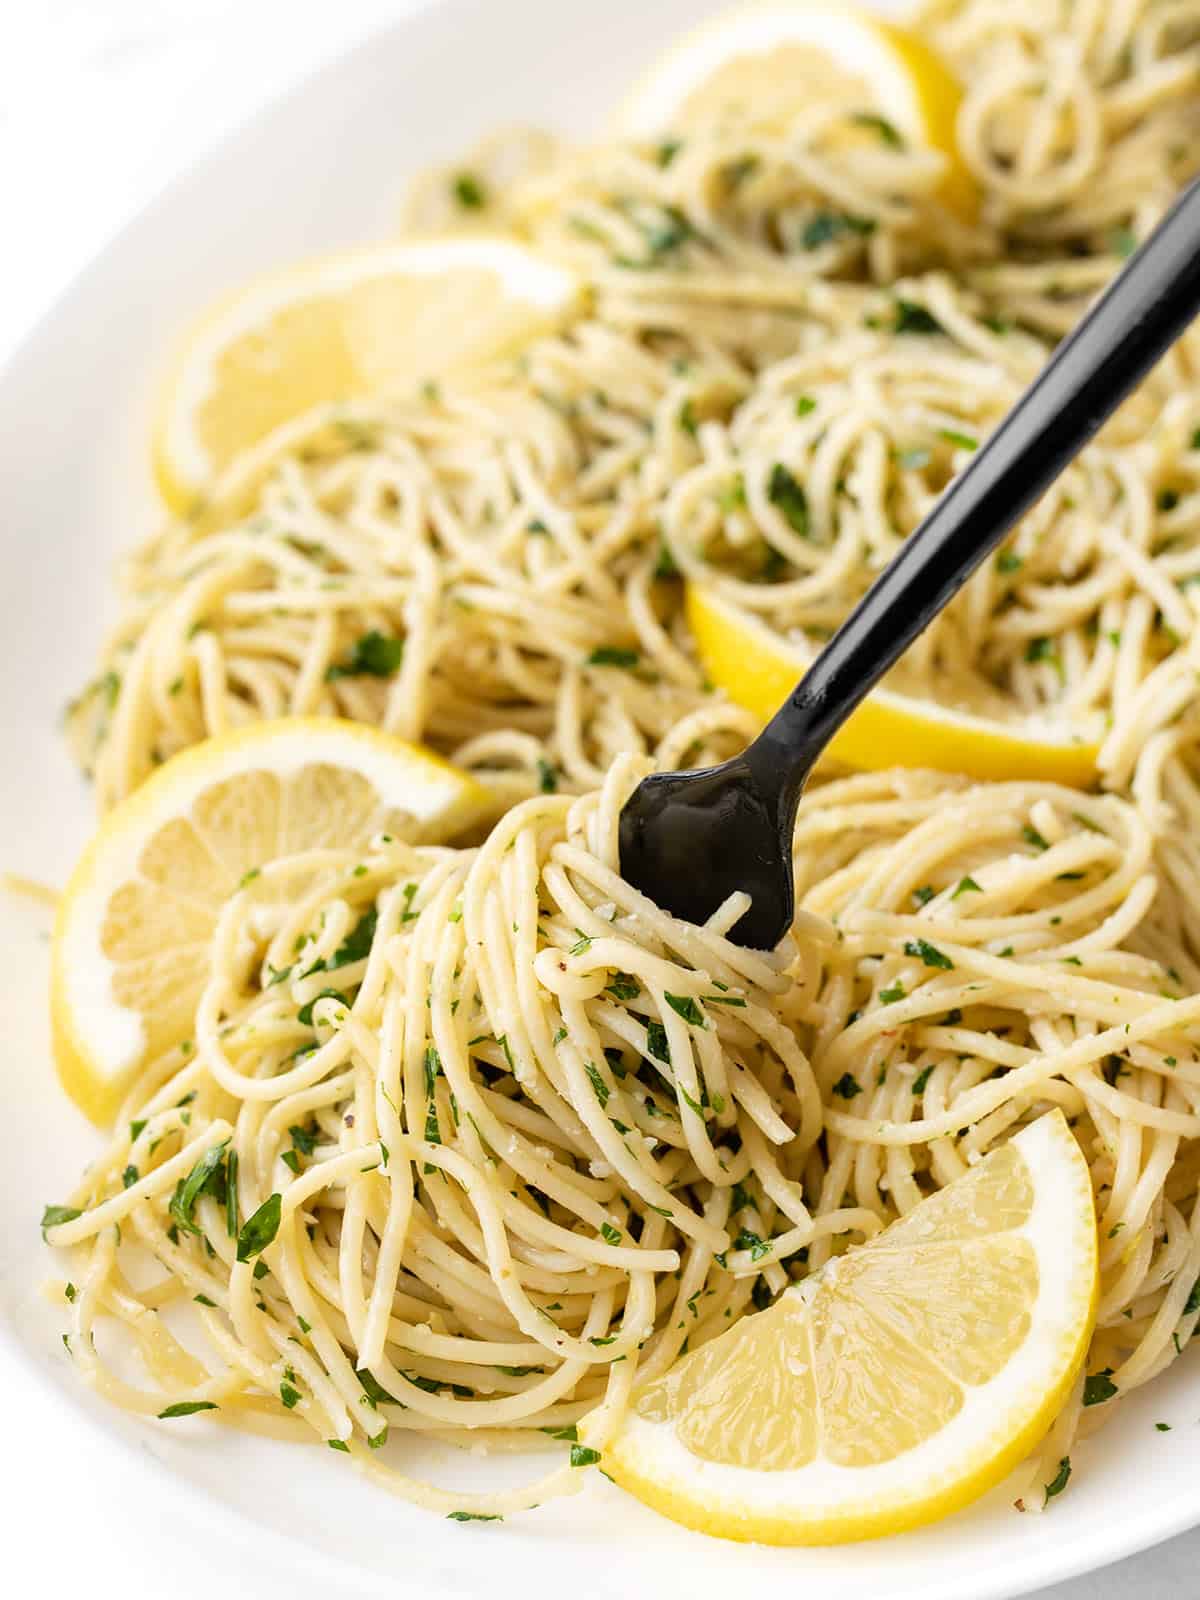 Lemon Parsley Pasta